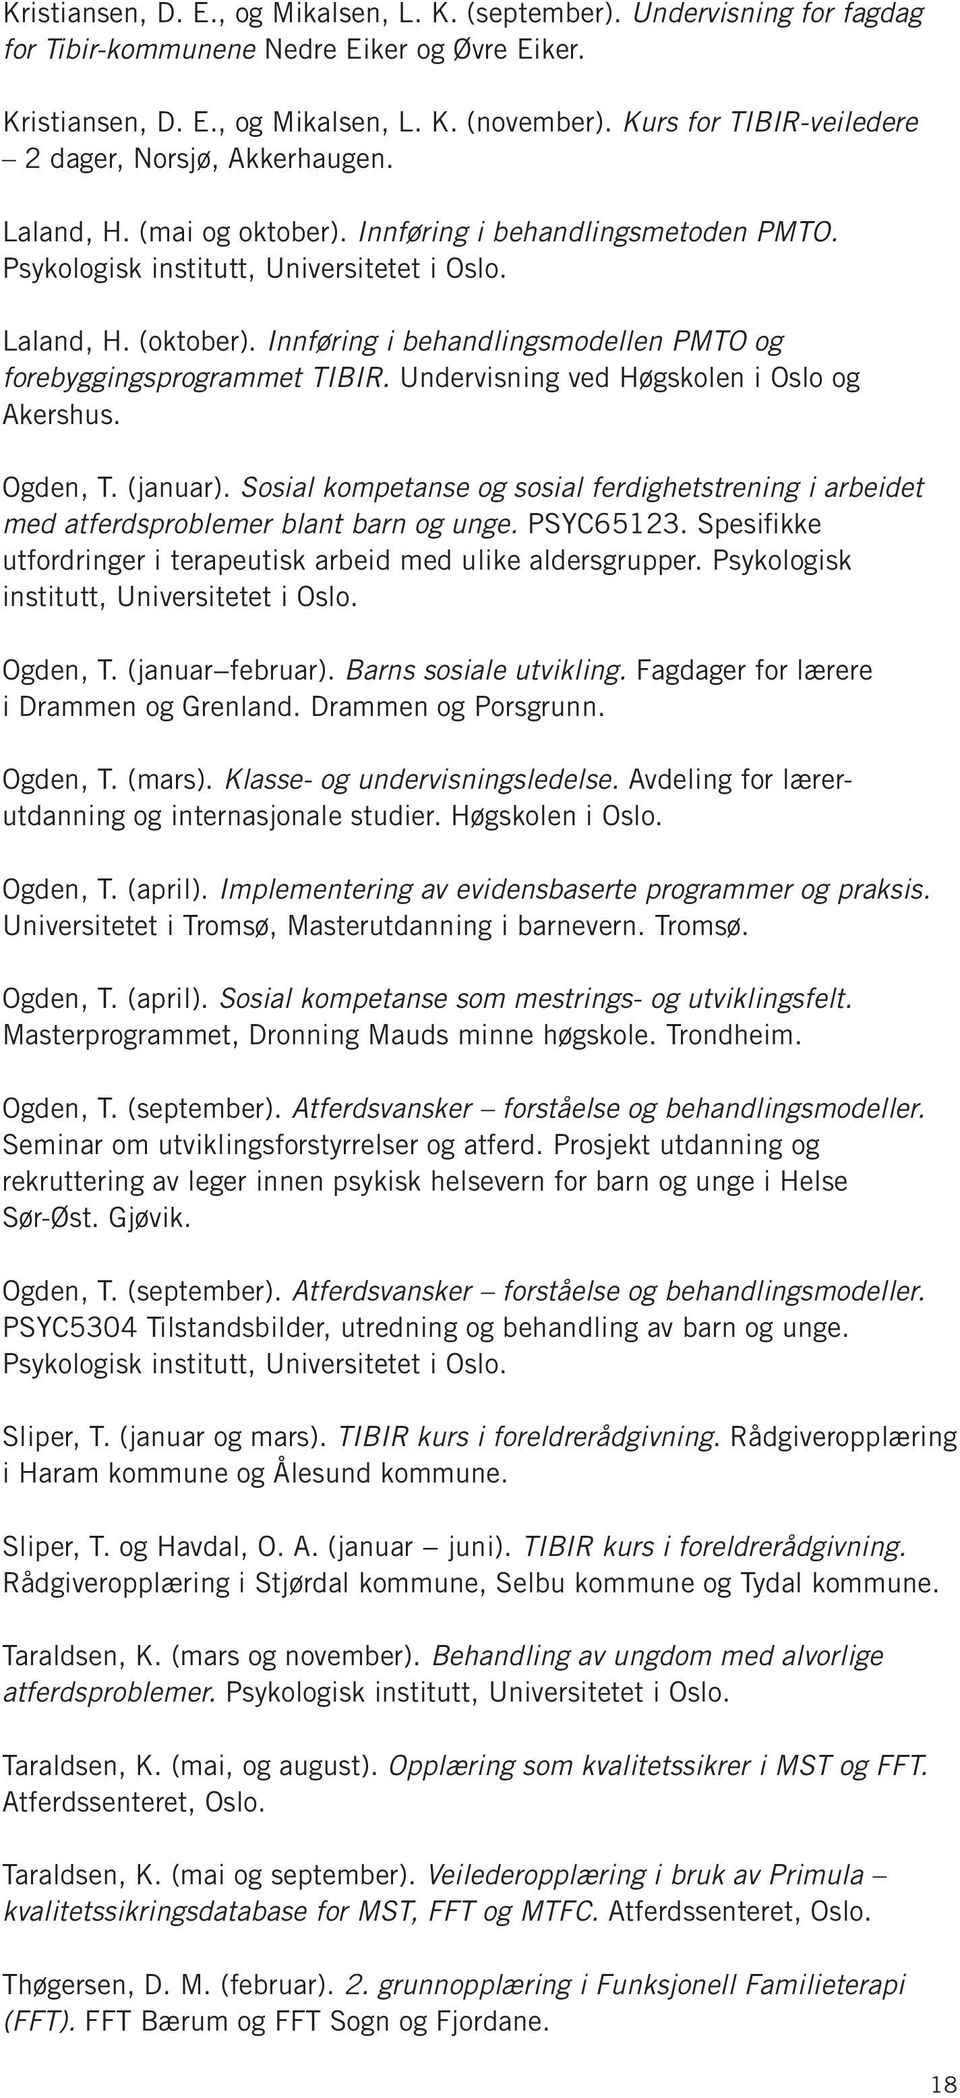 Innføring i behandlingsmodellen PMTO og forebyggingsprogrammet TIBIR. Undervisning ved Høgskolen i Oslo og Akershus. Ogden, T. (januar).